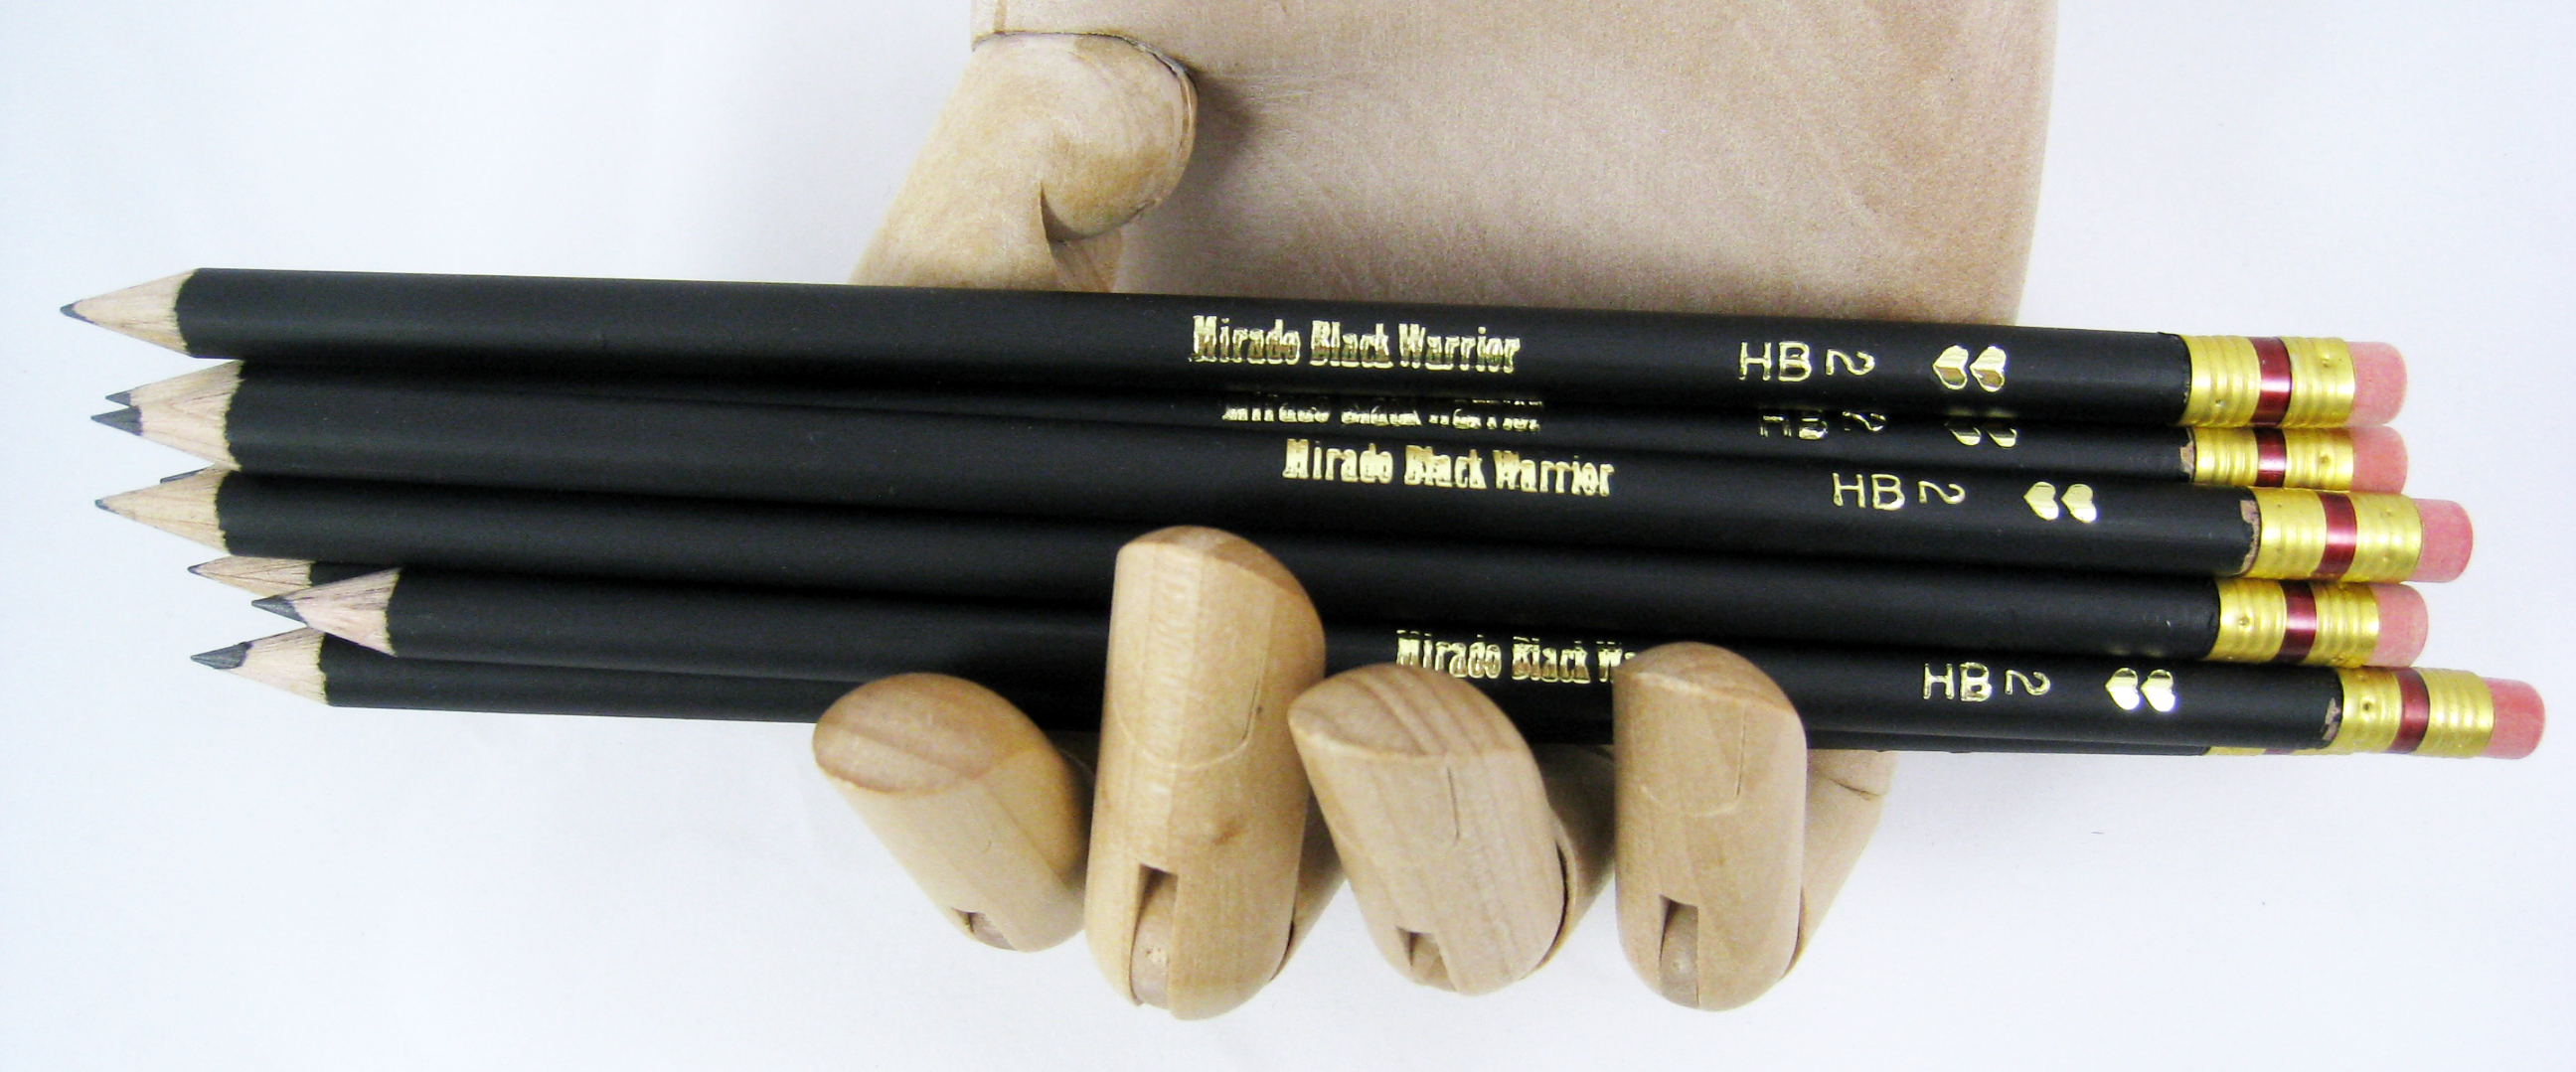 Paper Mate Mirado Classic Black Pencils With Eraser 